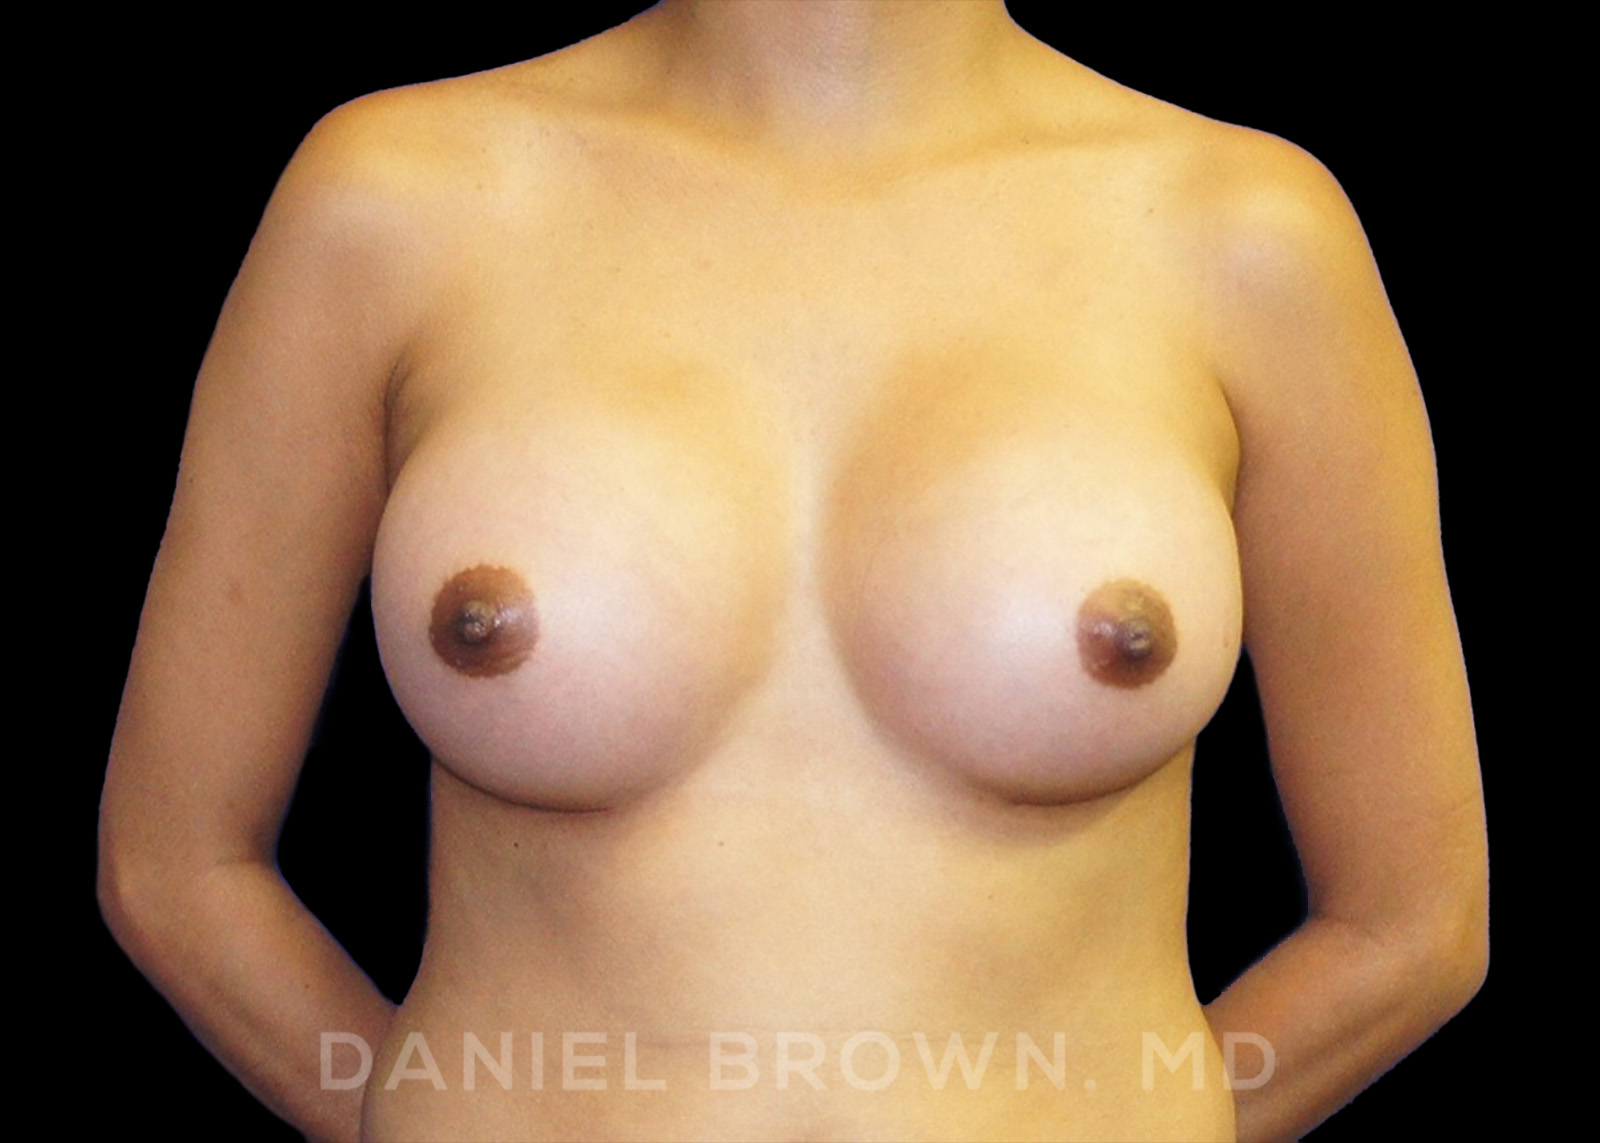 Breast Augmentation Patient Photo - Case 2410 - after view